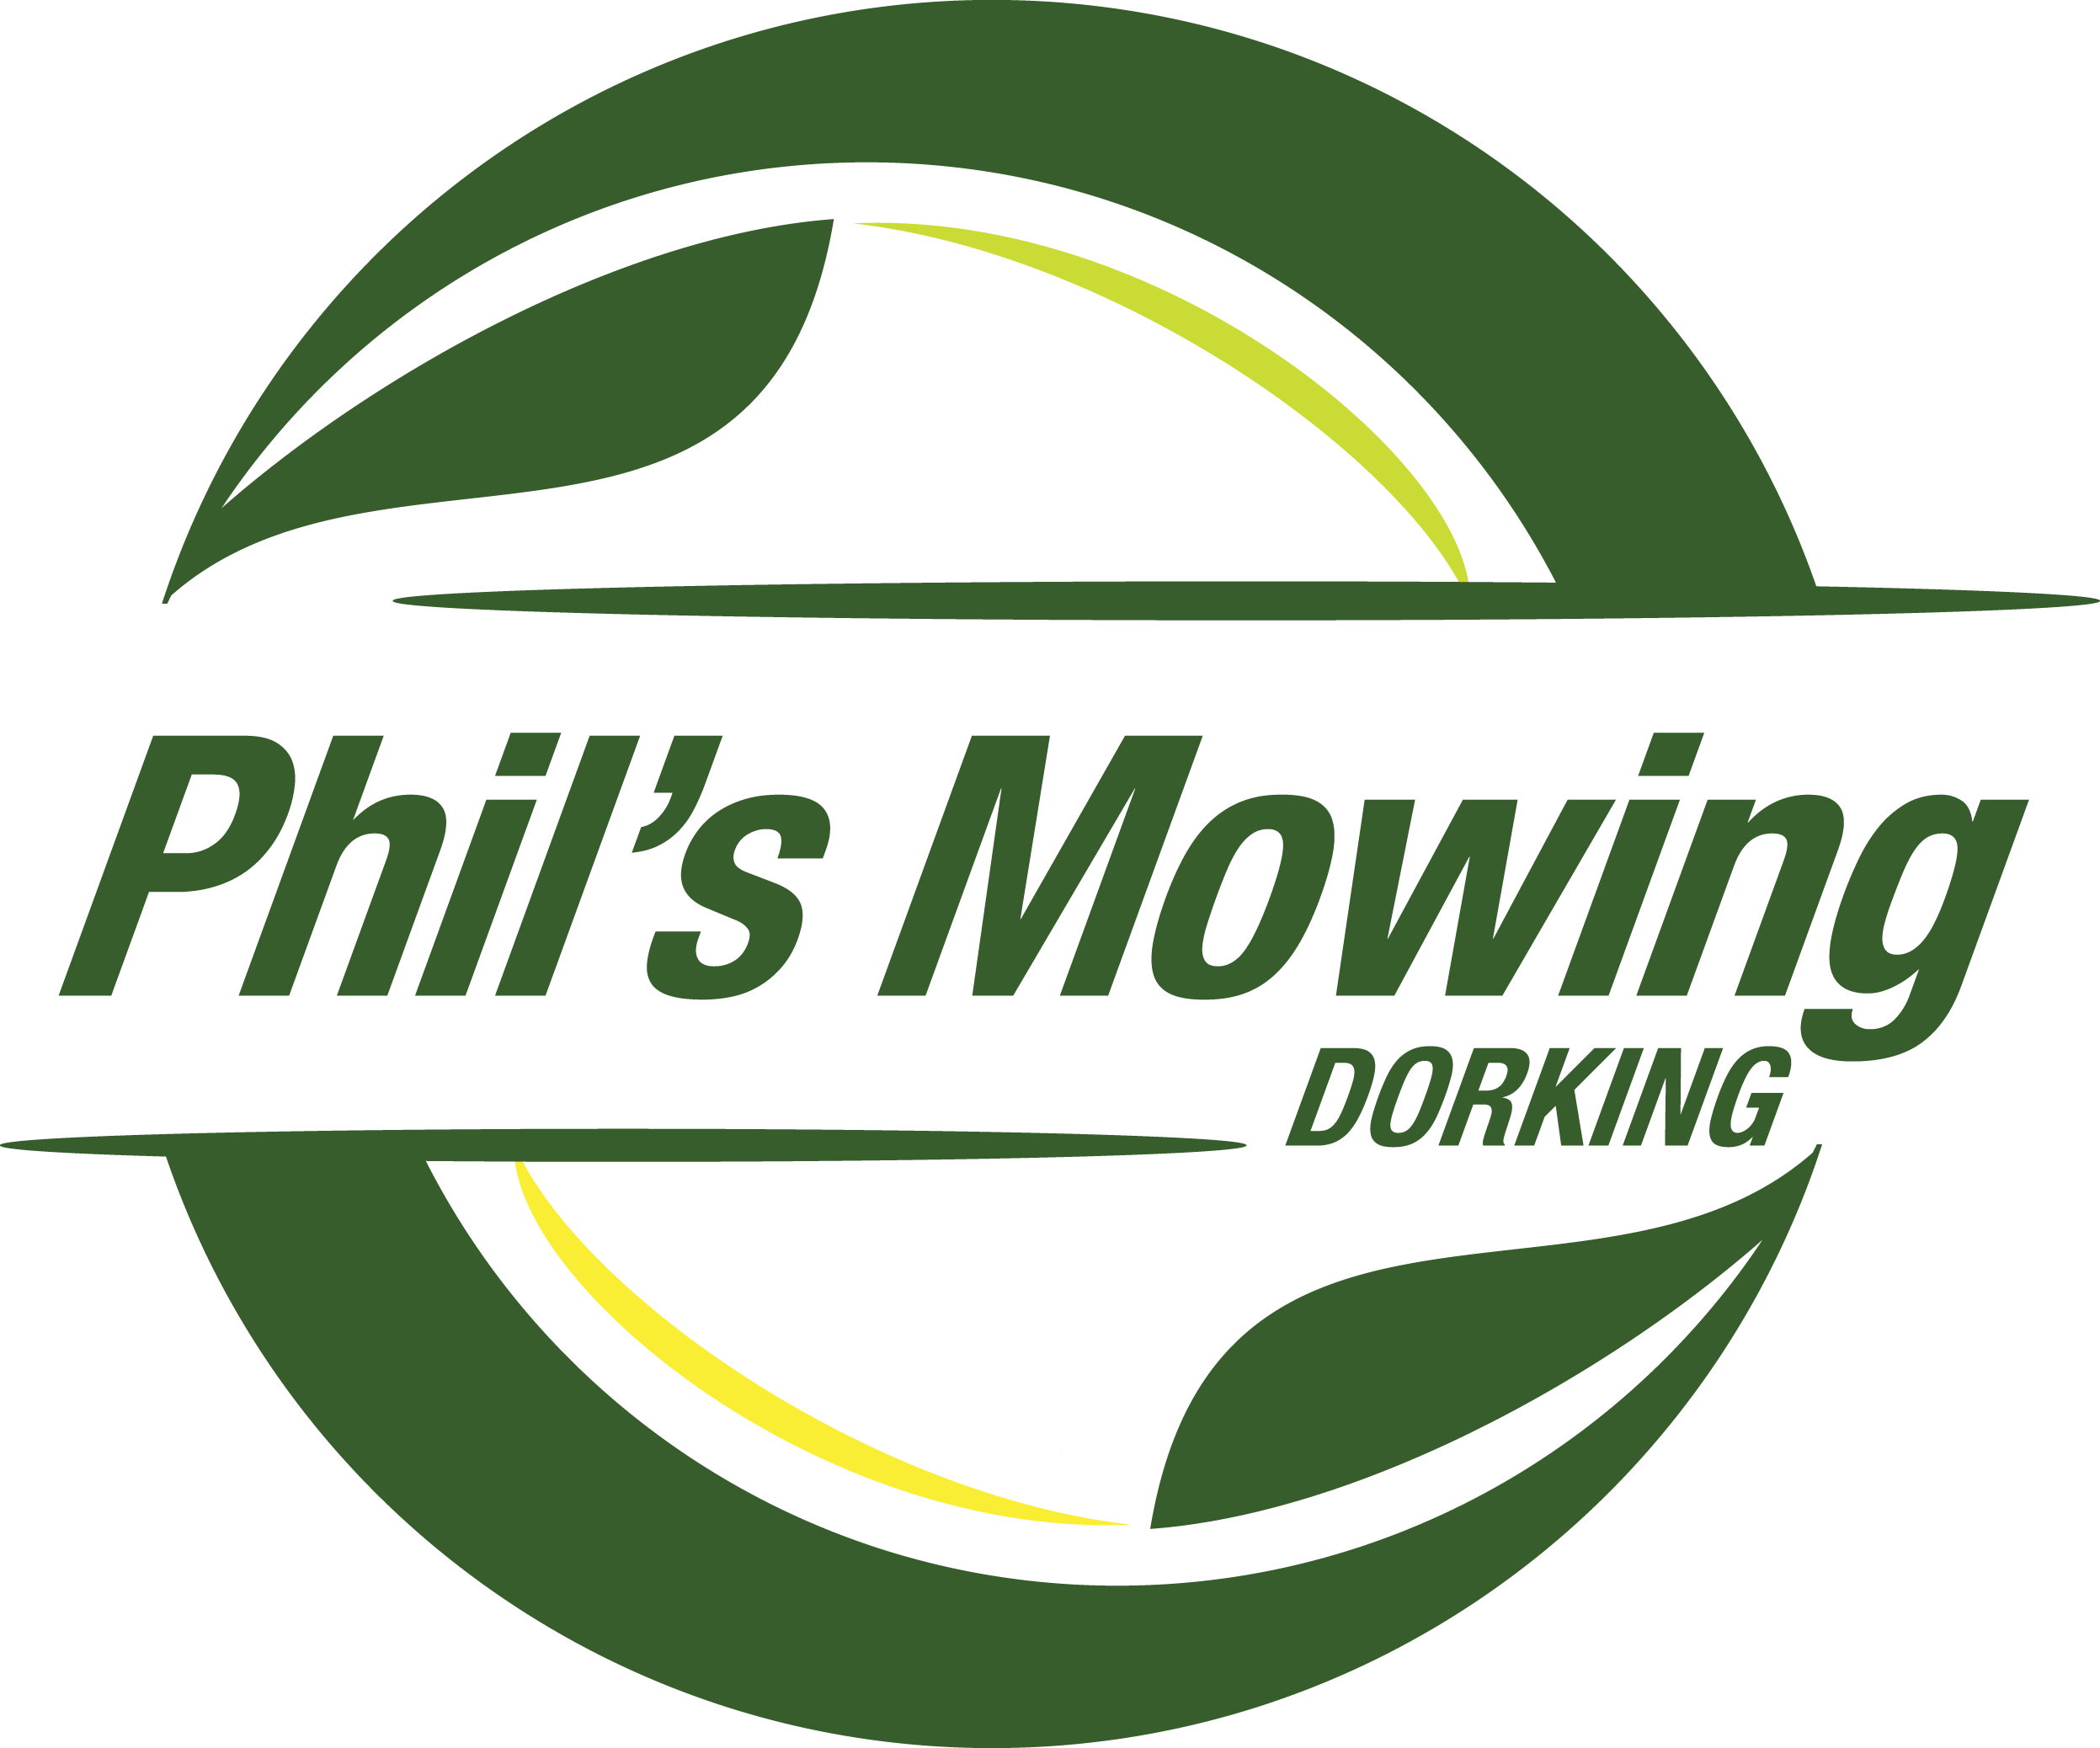 Phil's Mowing Dorking